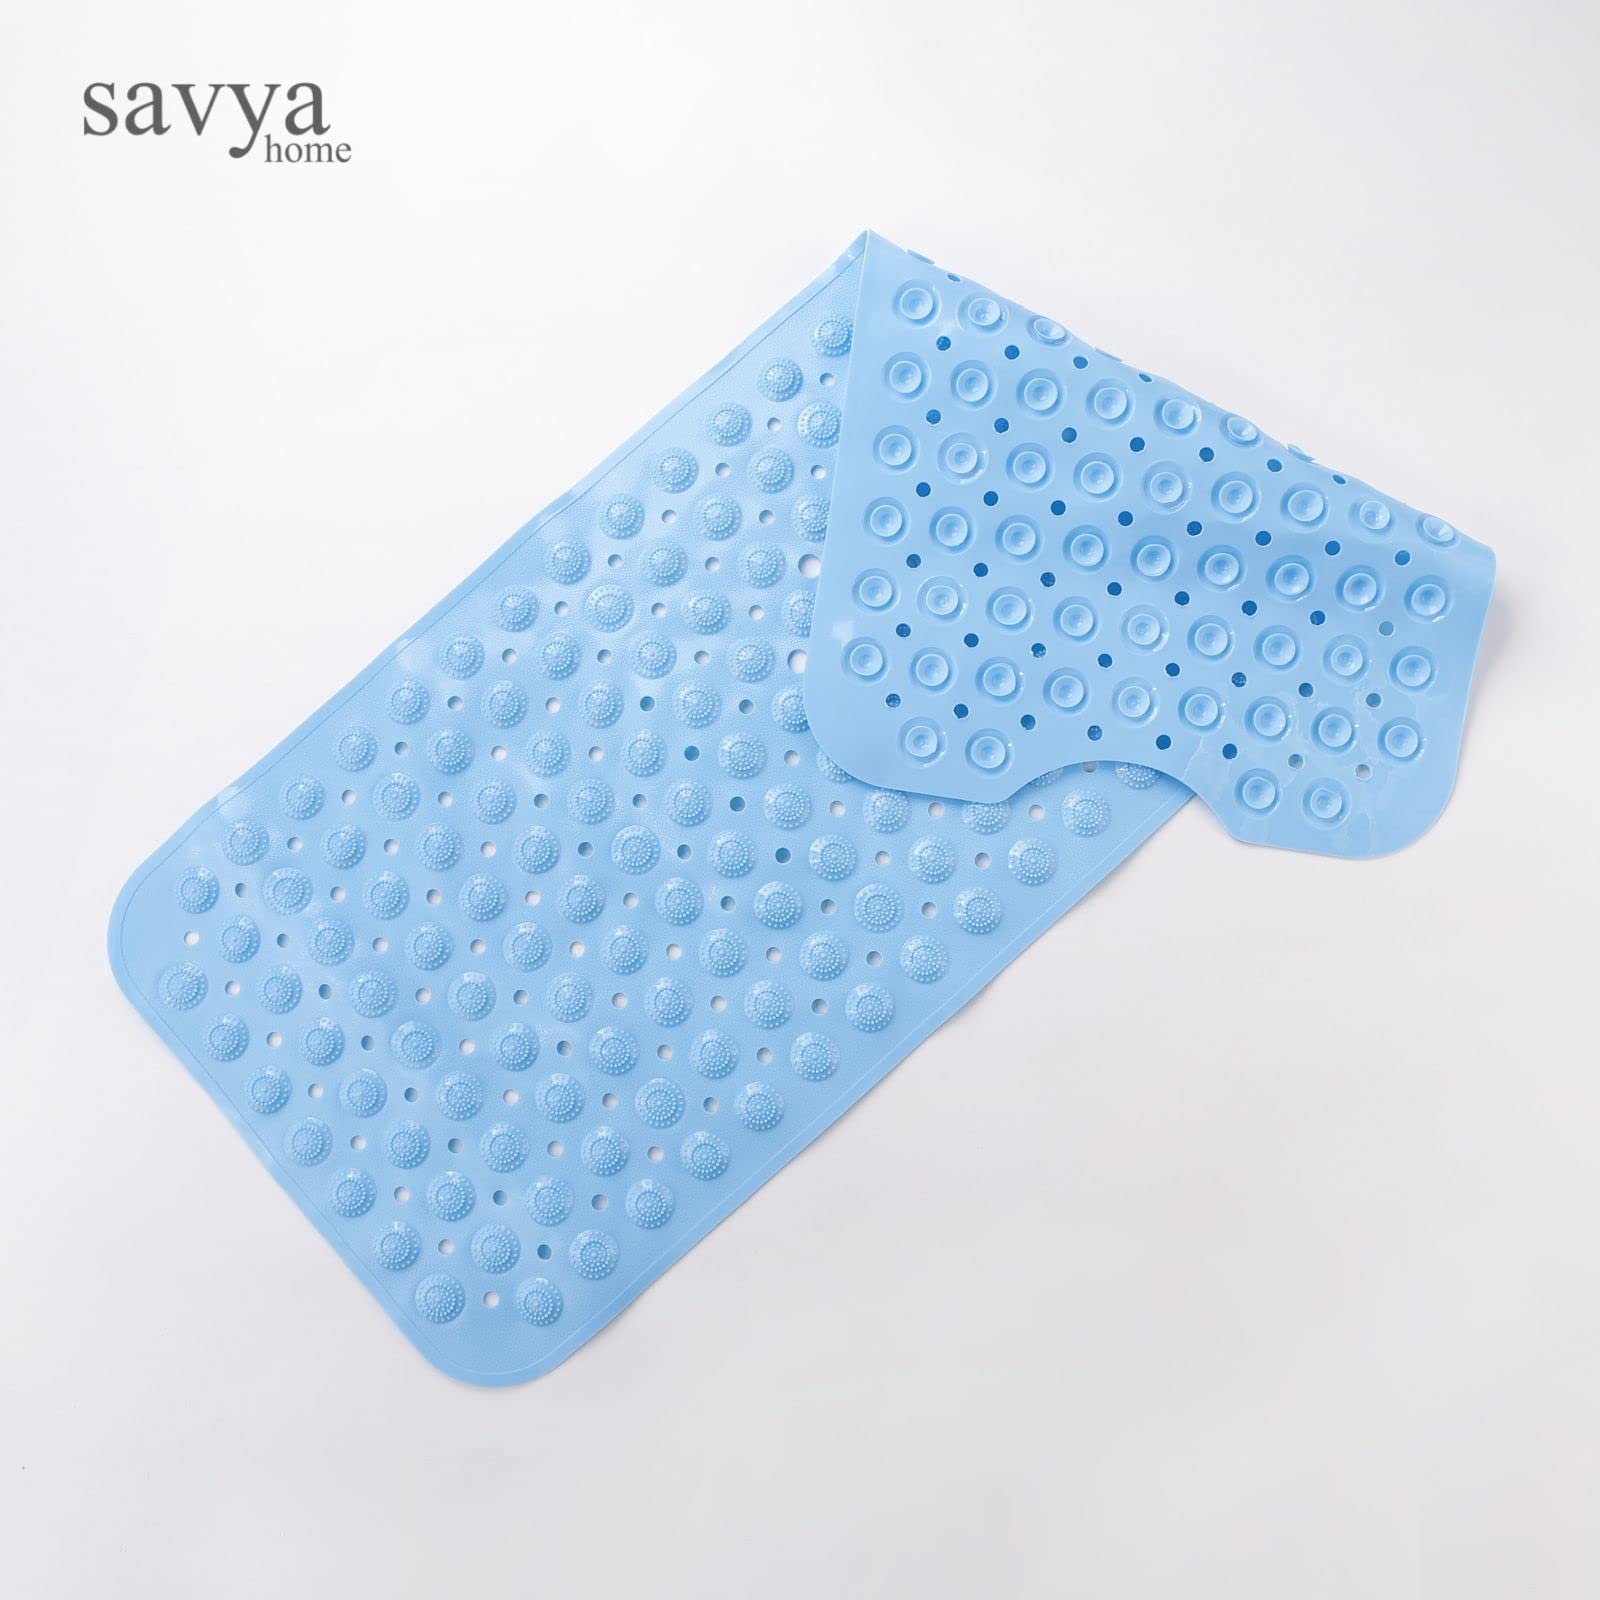 SAVYA HOME Diatom Mud Bathroom Floor Mat |71 x 35.5|40 x 100|PVC Accu-Pebble Soft & Light Weight Anti-Skid Mat for Living Room,Bathroom/Shower Mat/Multipurpose(Sky Blue) (100 x 40, Sky Blue)